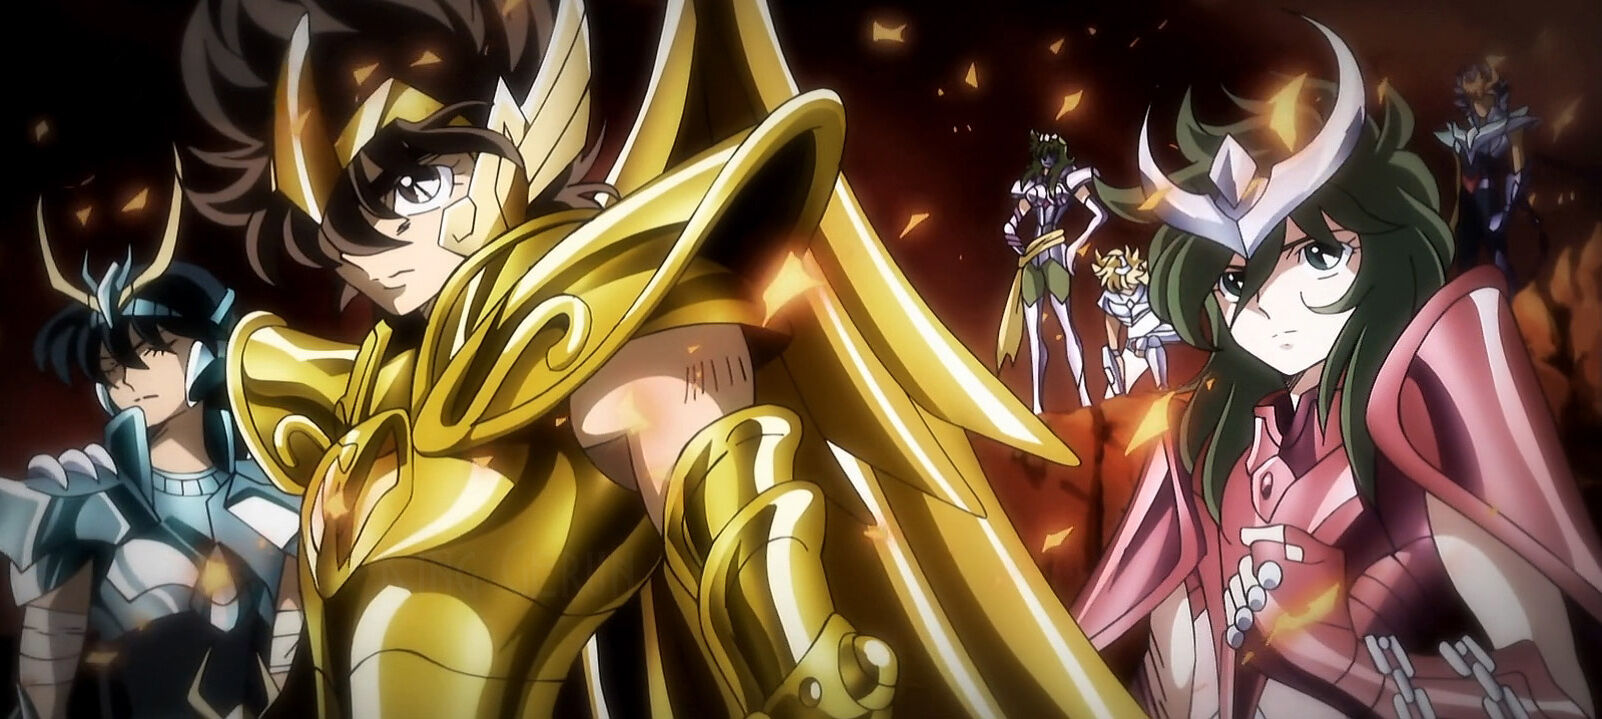 Saint Seiya Omega The Strongest Army! The Gold Saints Assemble